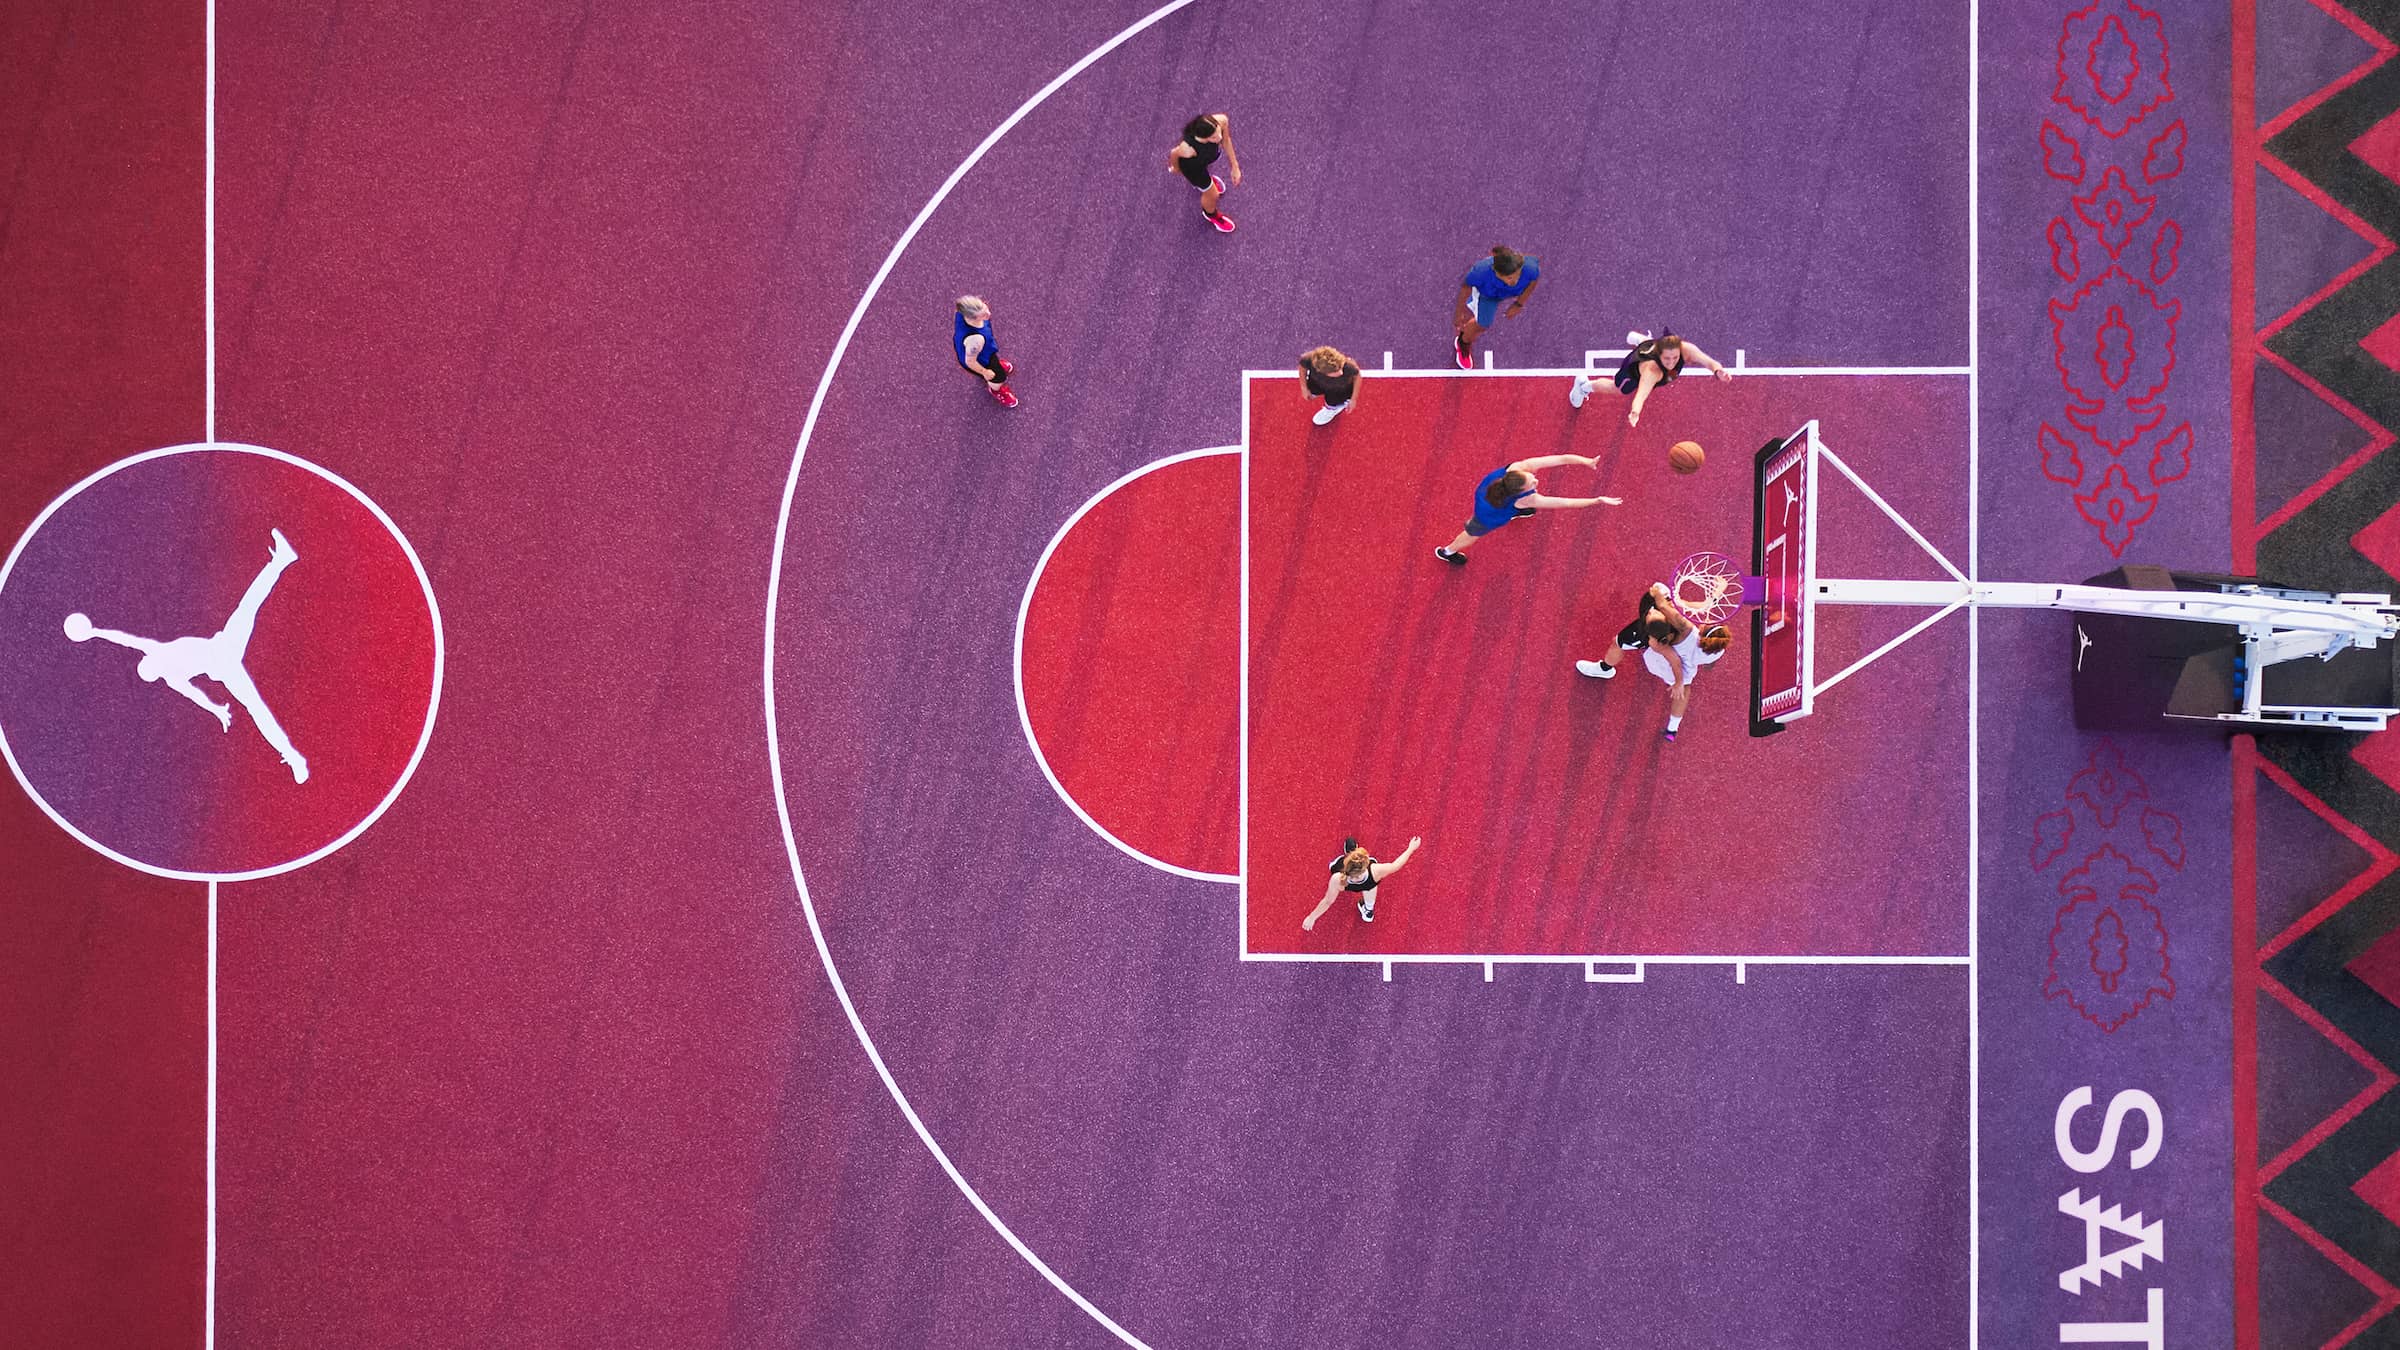 Satou sabally and jordan brand transformed a berlin basketball court for young girls